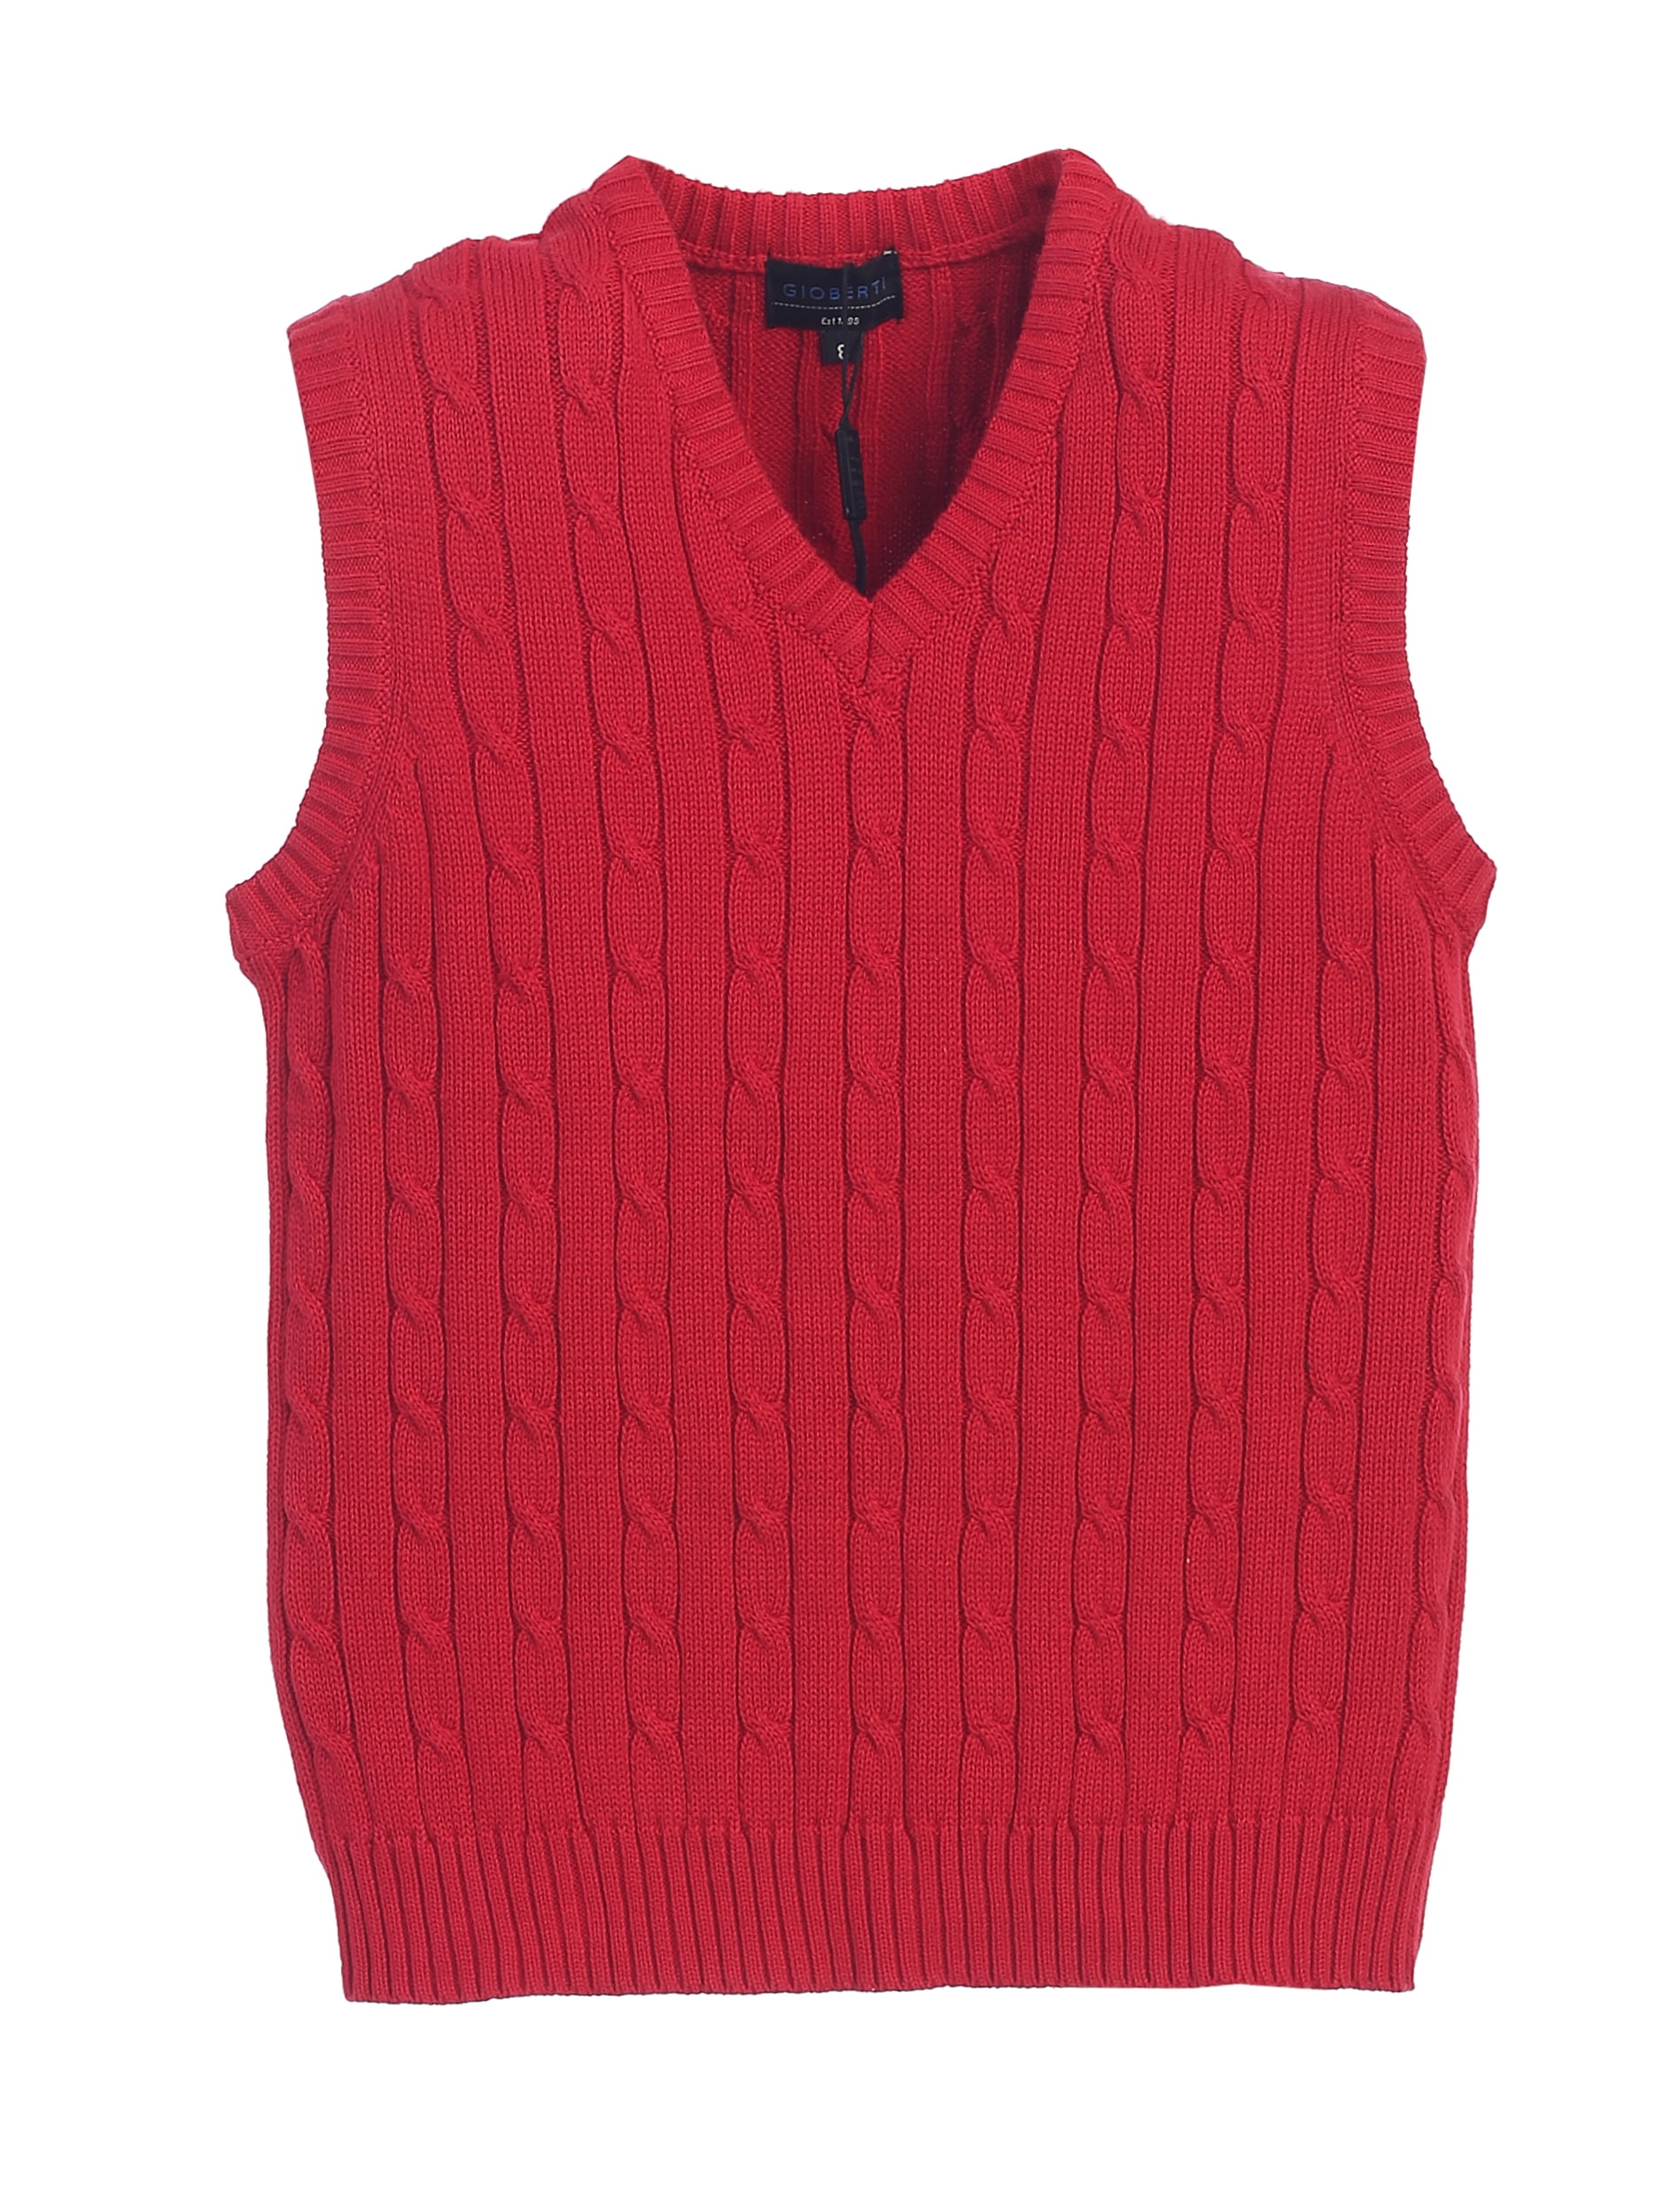 Kids V Neck Knitted Vest Sleeveless Jumpers Knitwear School Tank Top Sweater for Boys Girls 